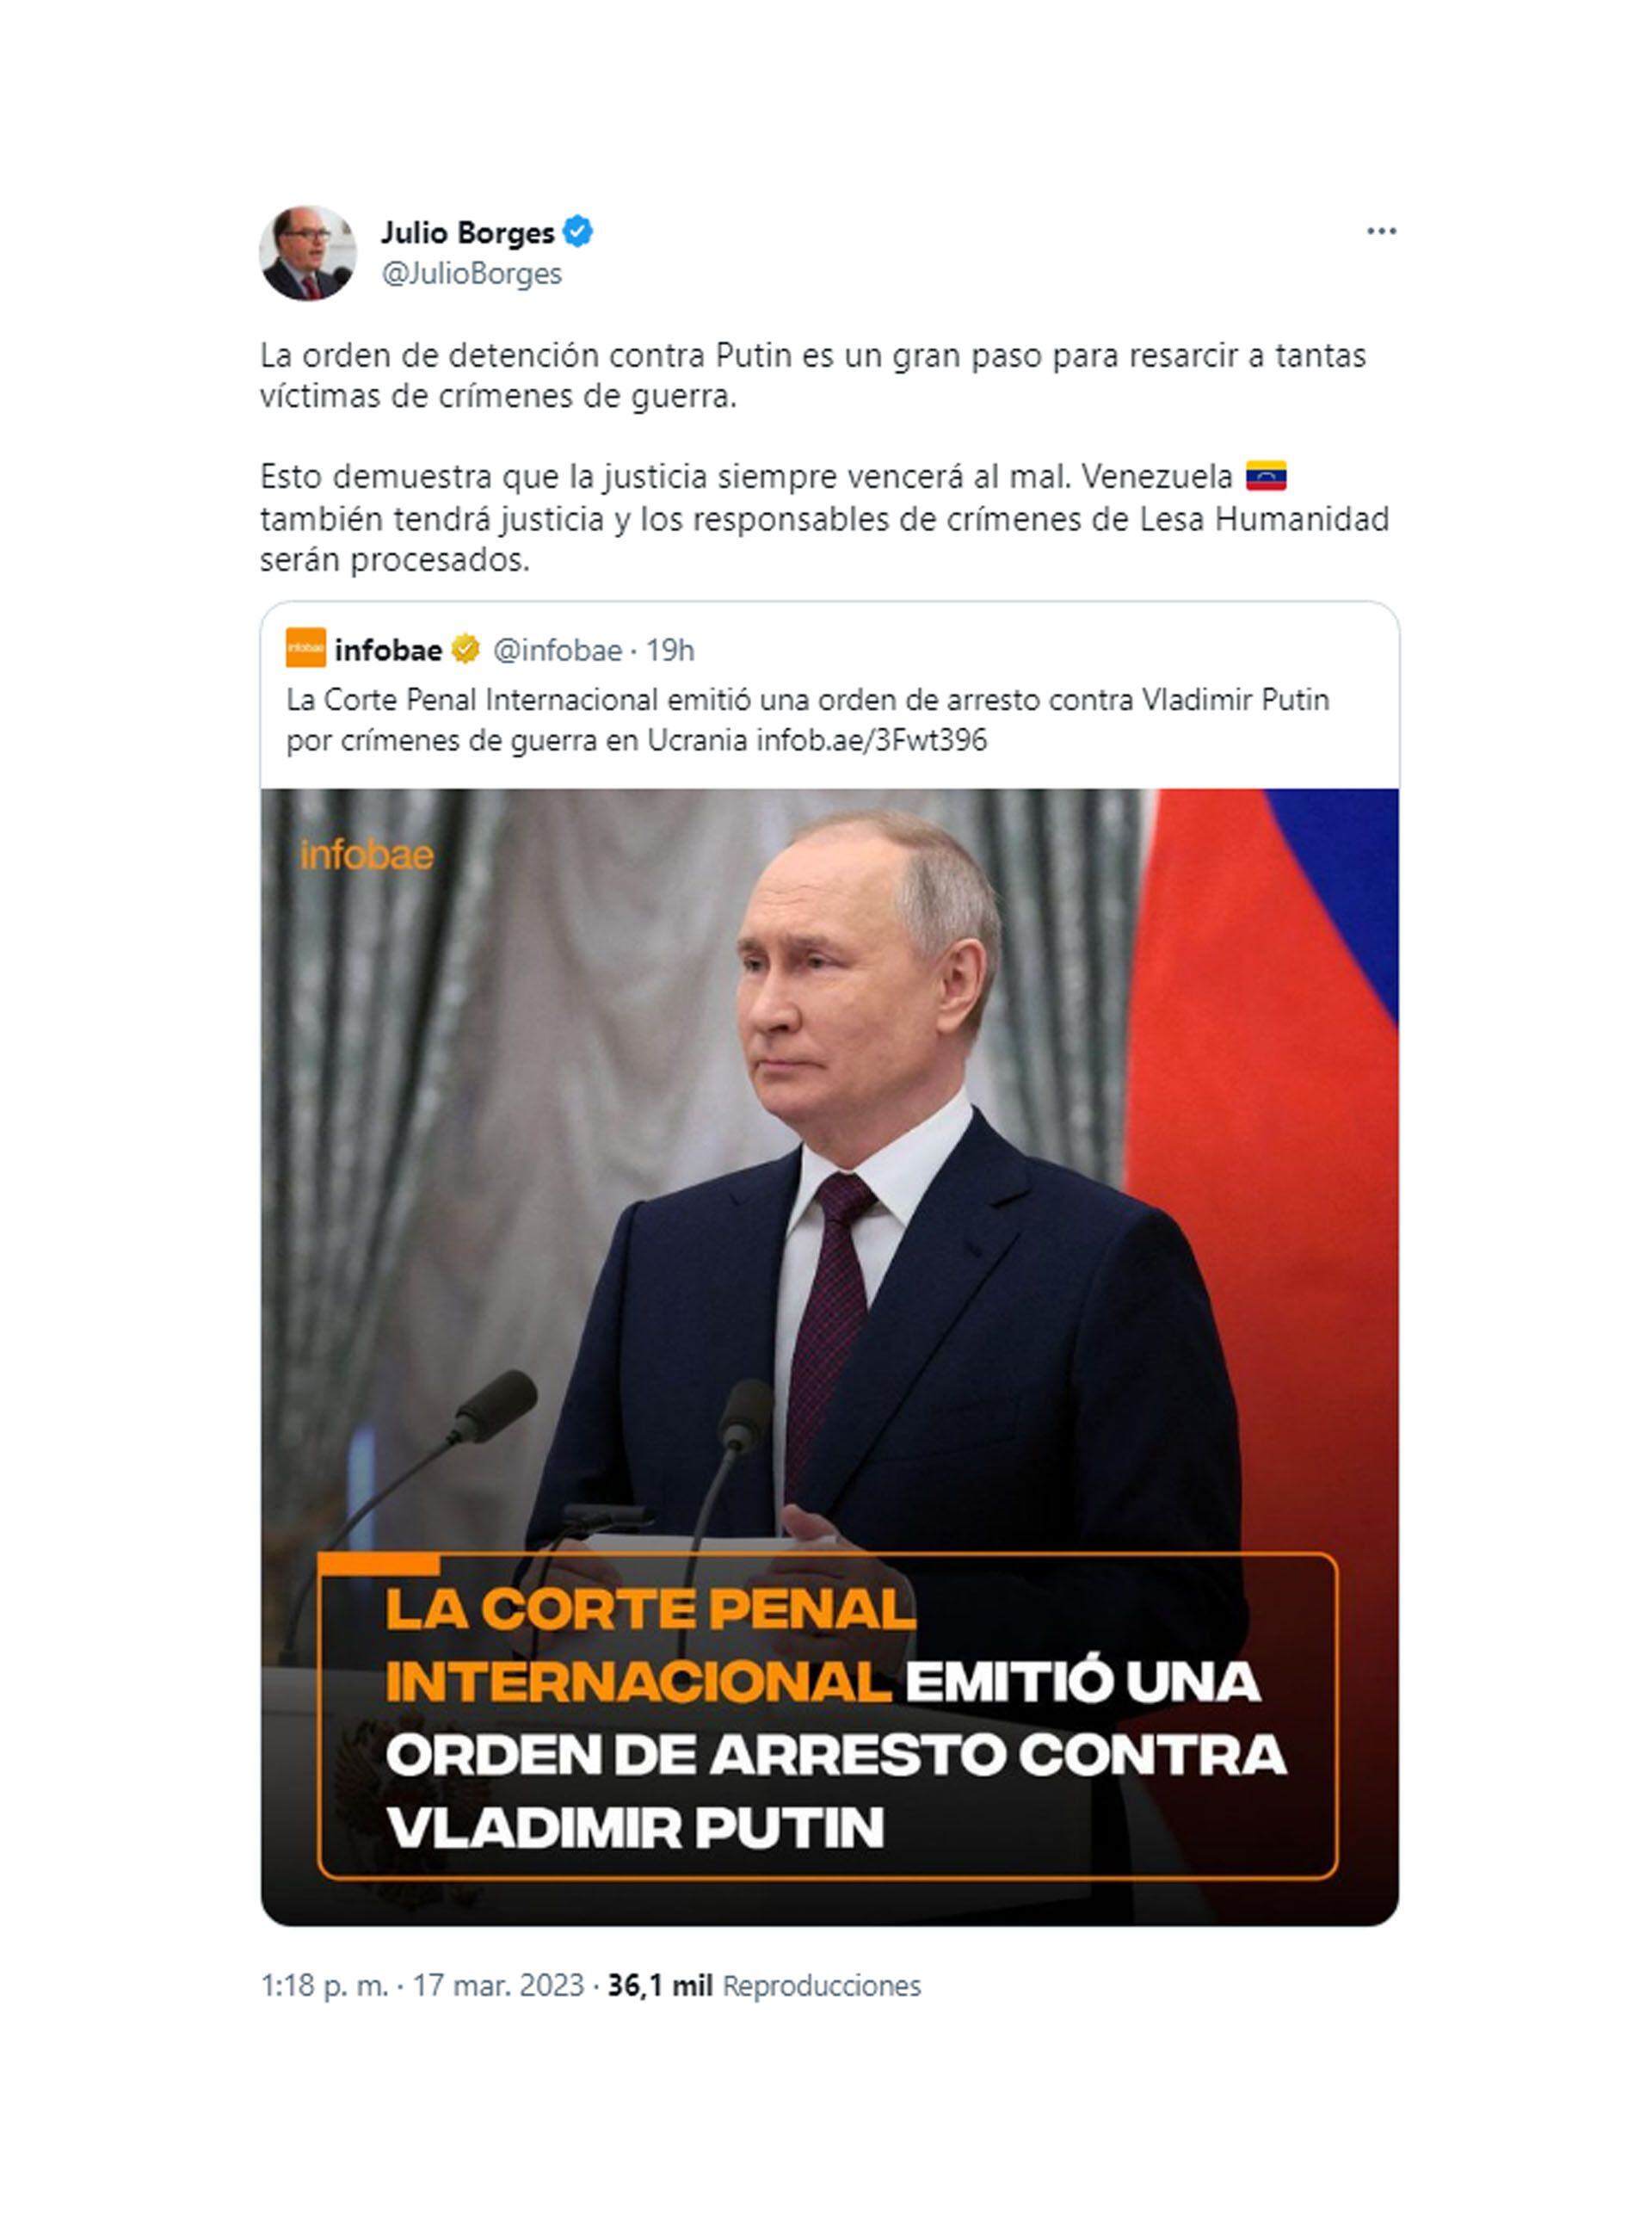 Julio Borges y Juan Guaidó tuits